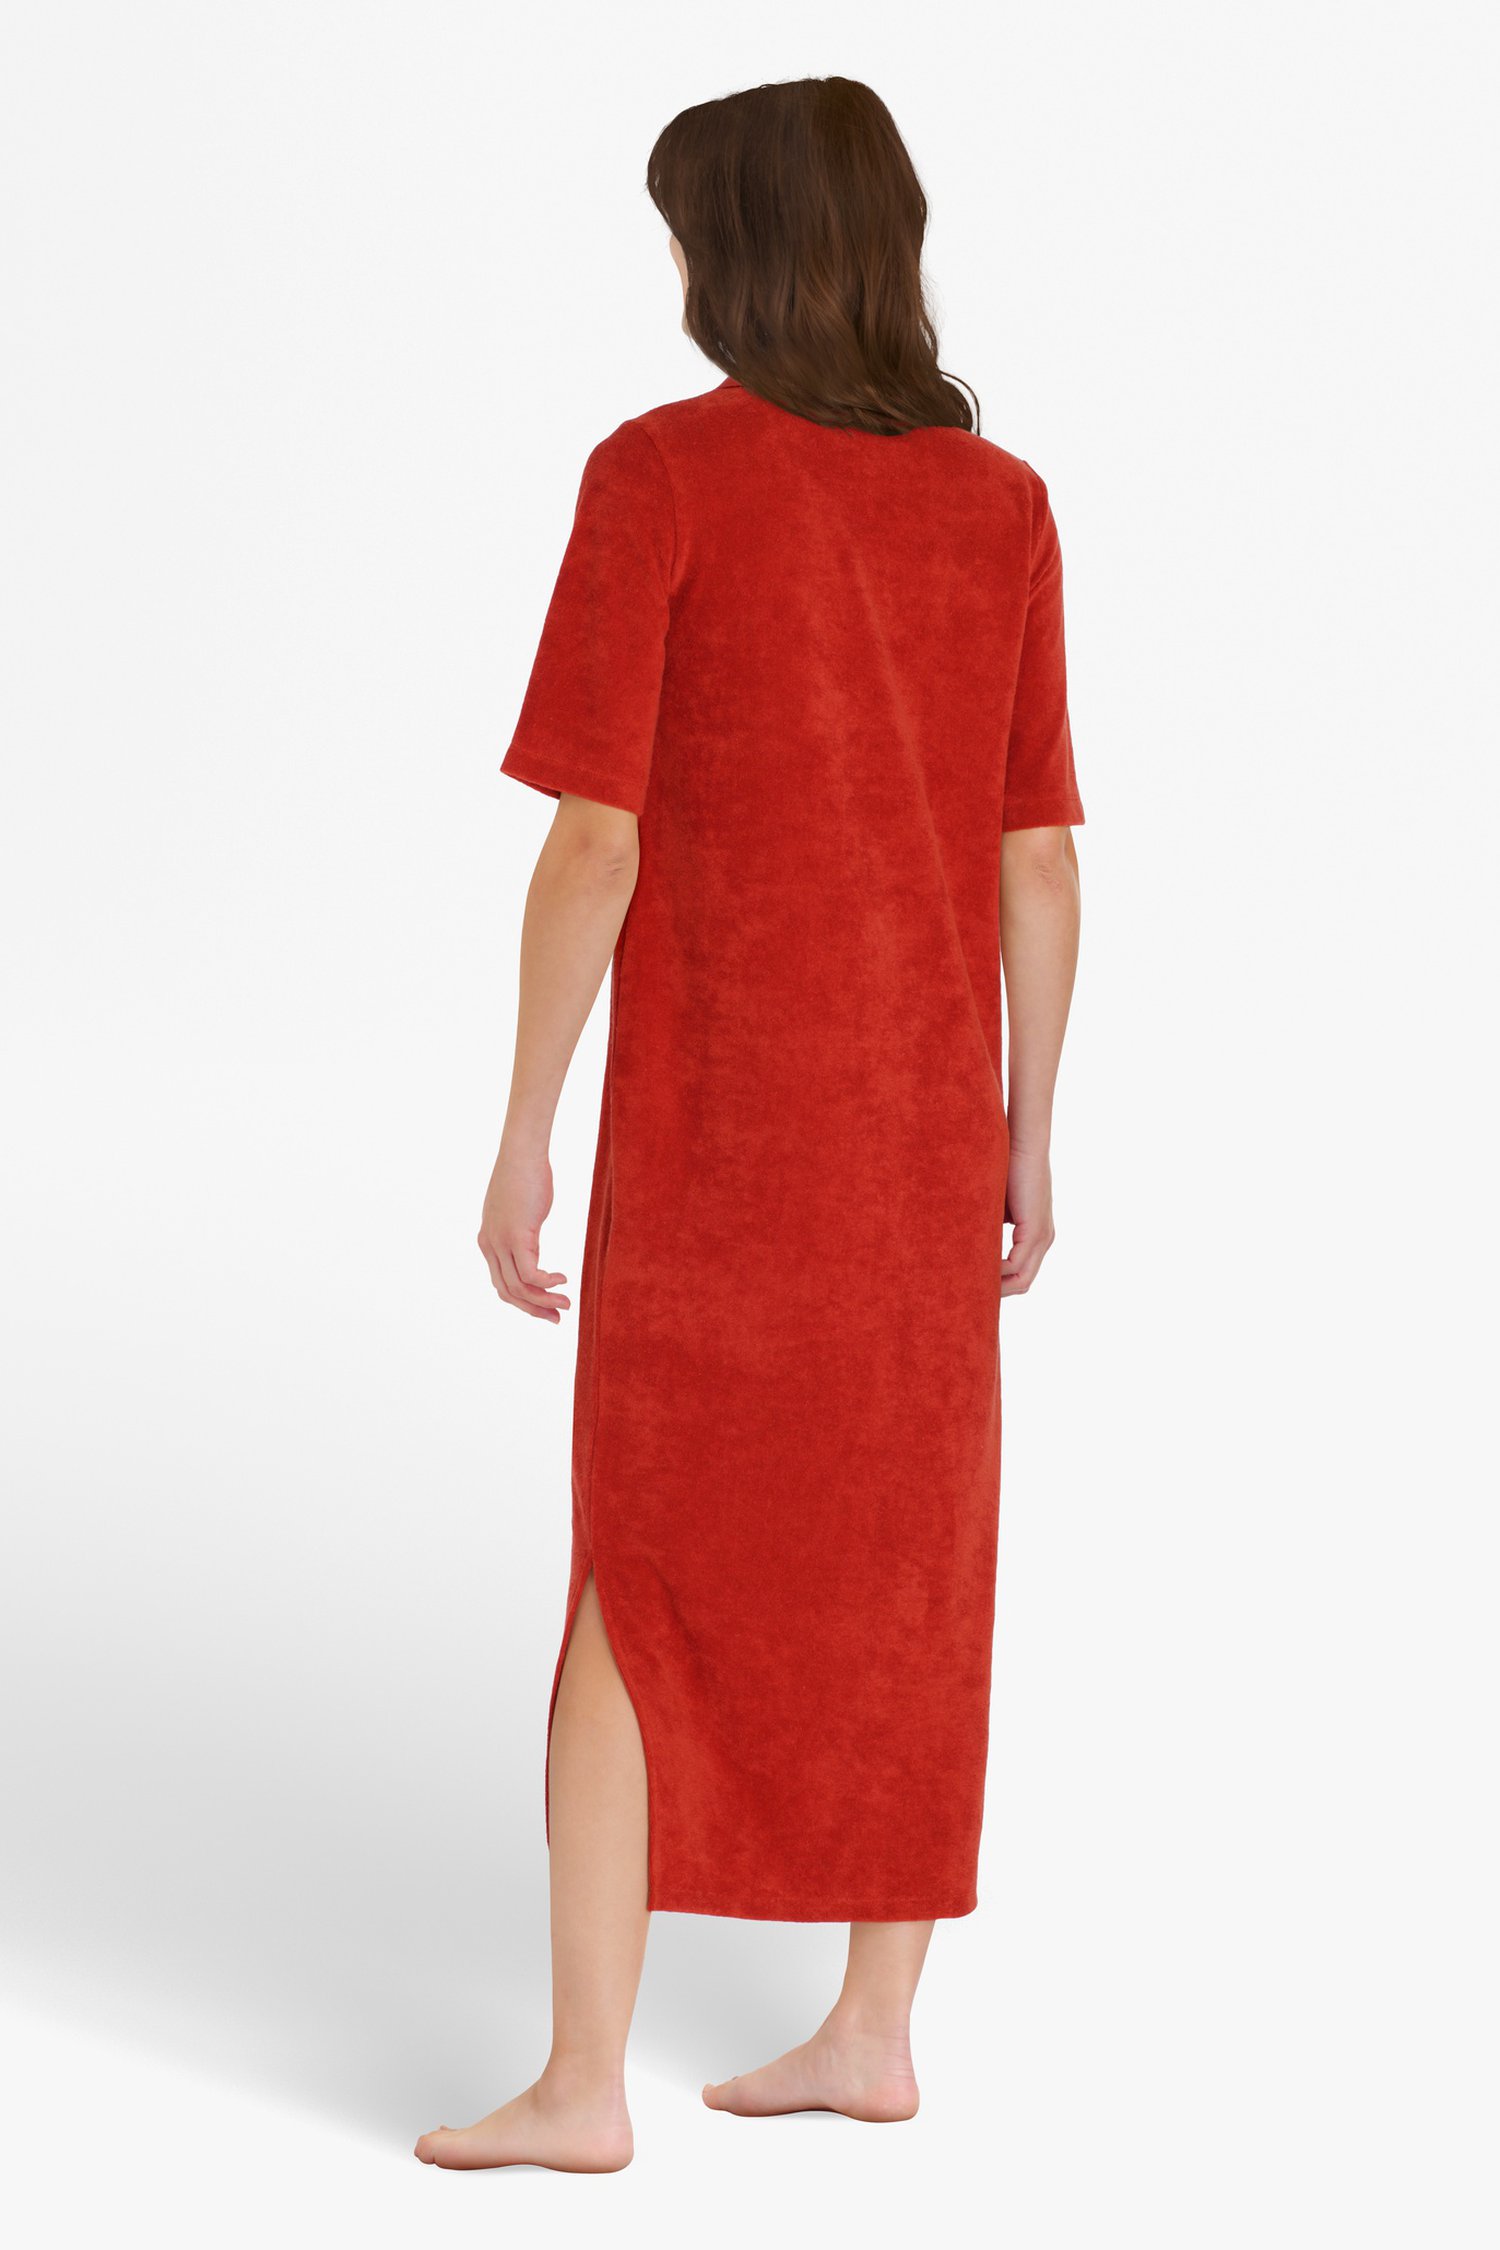 onhandig Verscheidenheid pad Lang roodbruin kleed in badstof van Liberty Island homewear | 6688451 | e5